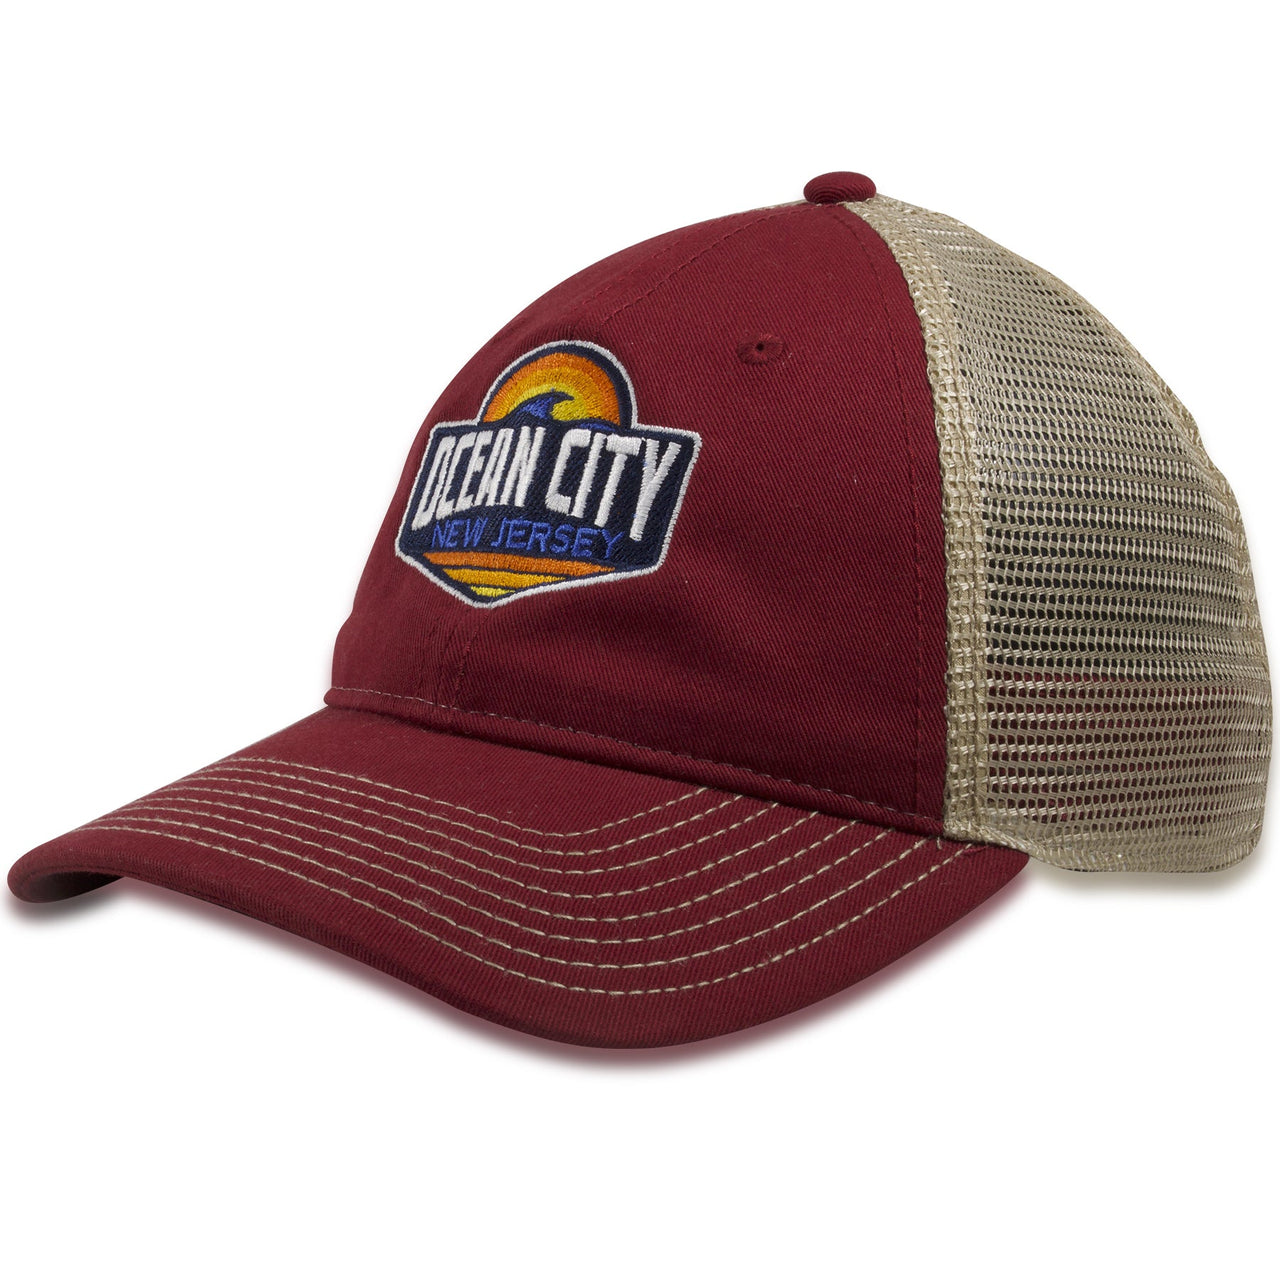 Ocean City, New Jersey Sunset Wave Cardinal Red / Khaki Mesh-Back Trucker Snapback Hat